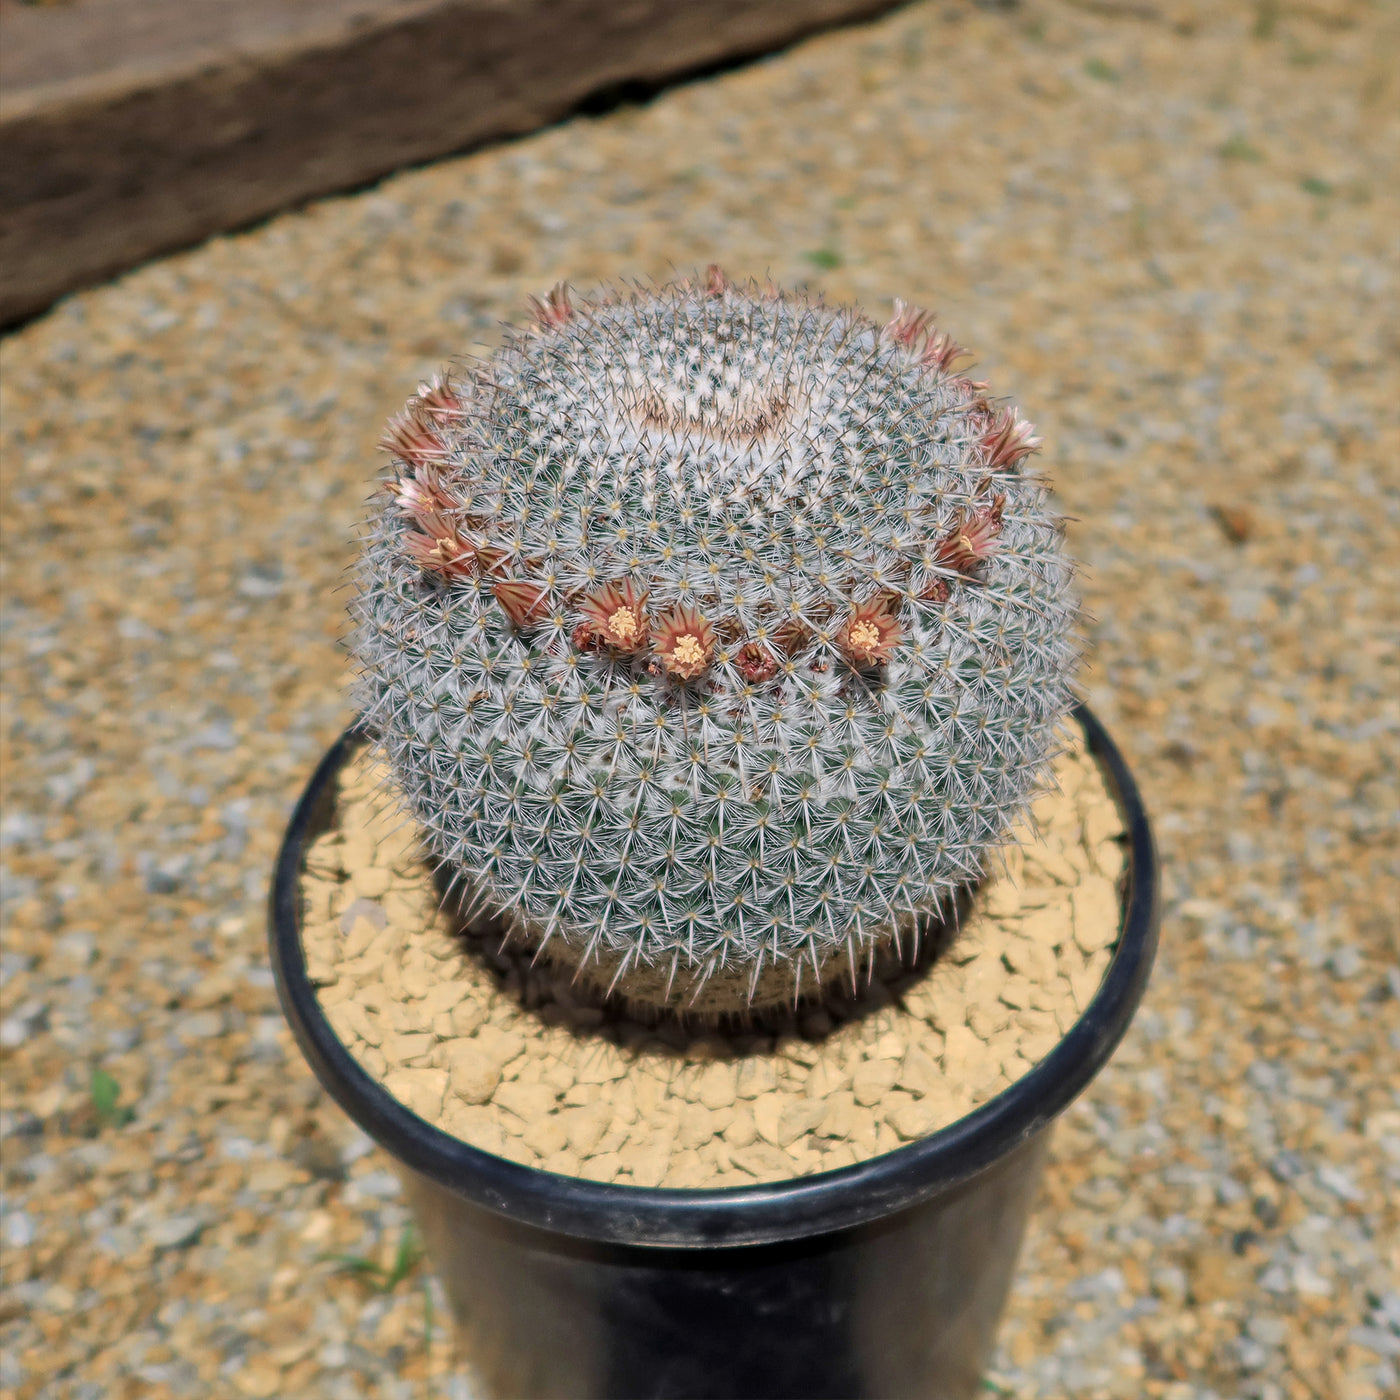 Owl Eye Cactus 'Mammillaria Parkinsonii'